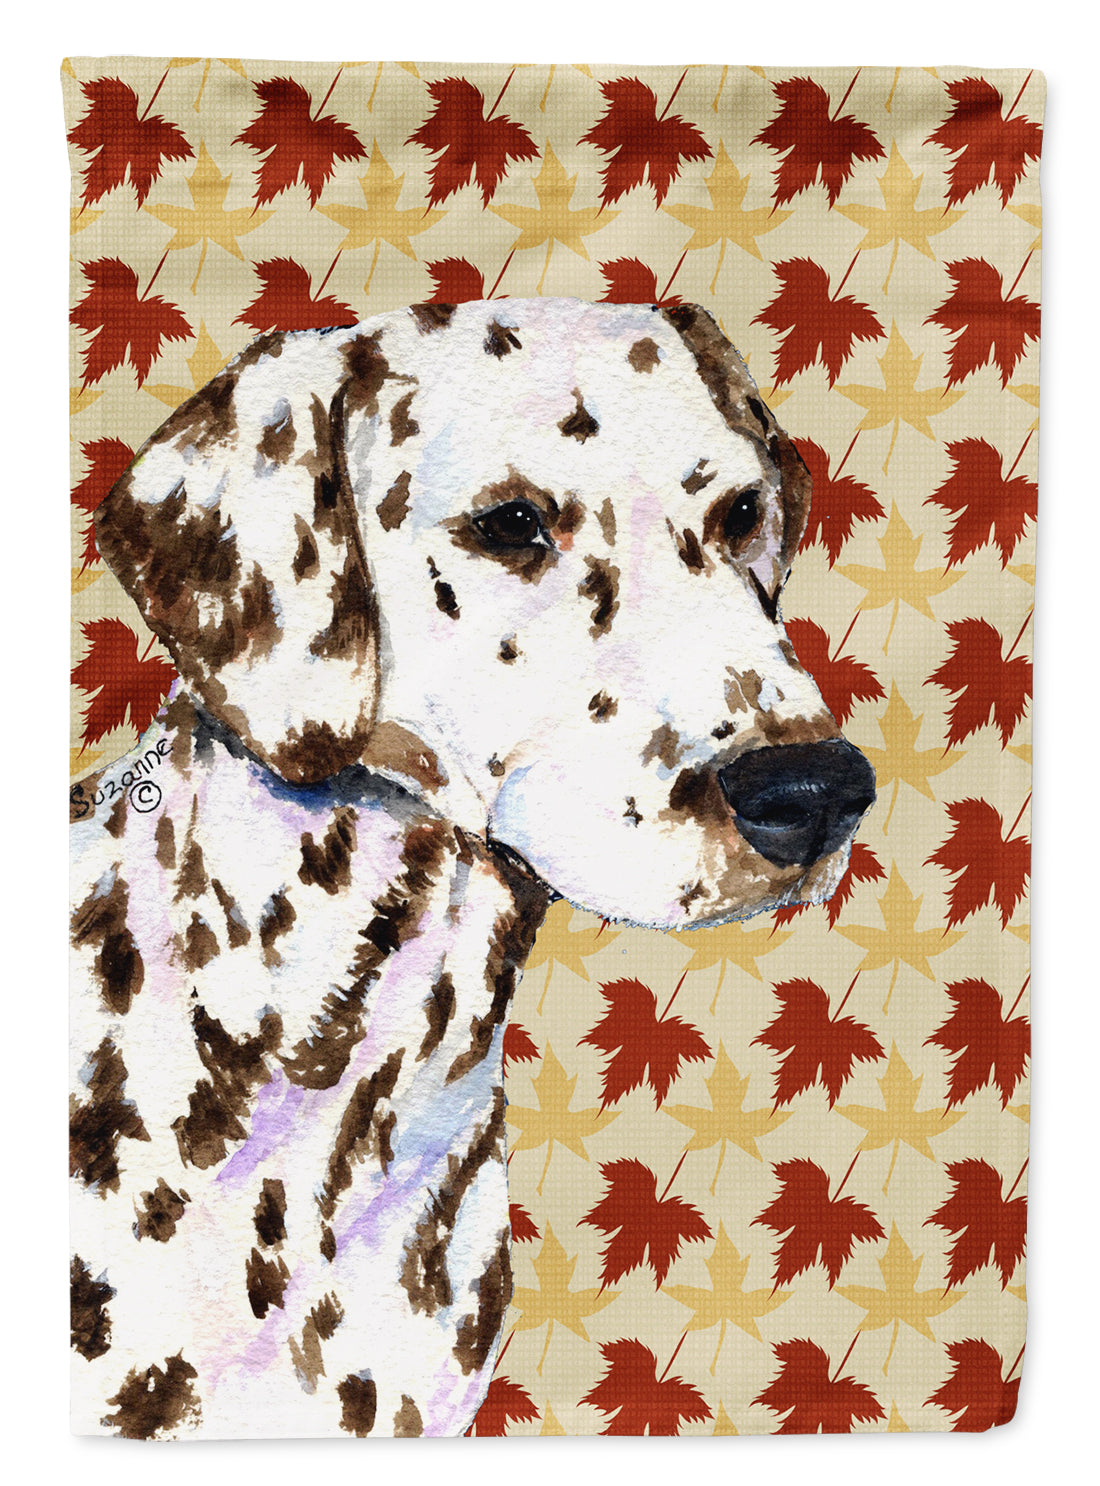 Dalmatian Fall Leaves Portrait Flag Garden Size.